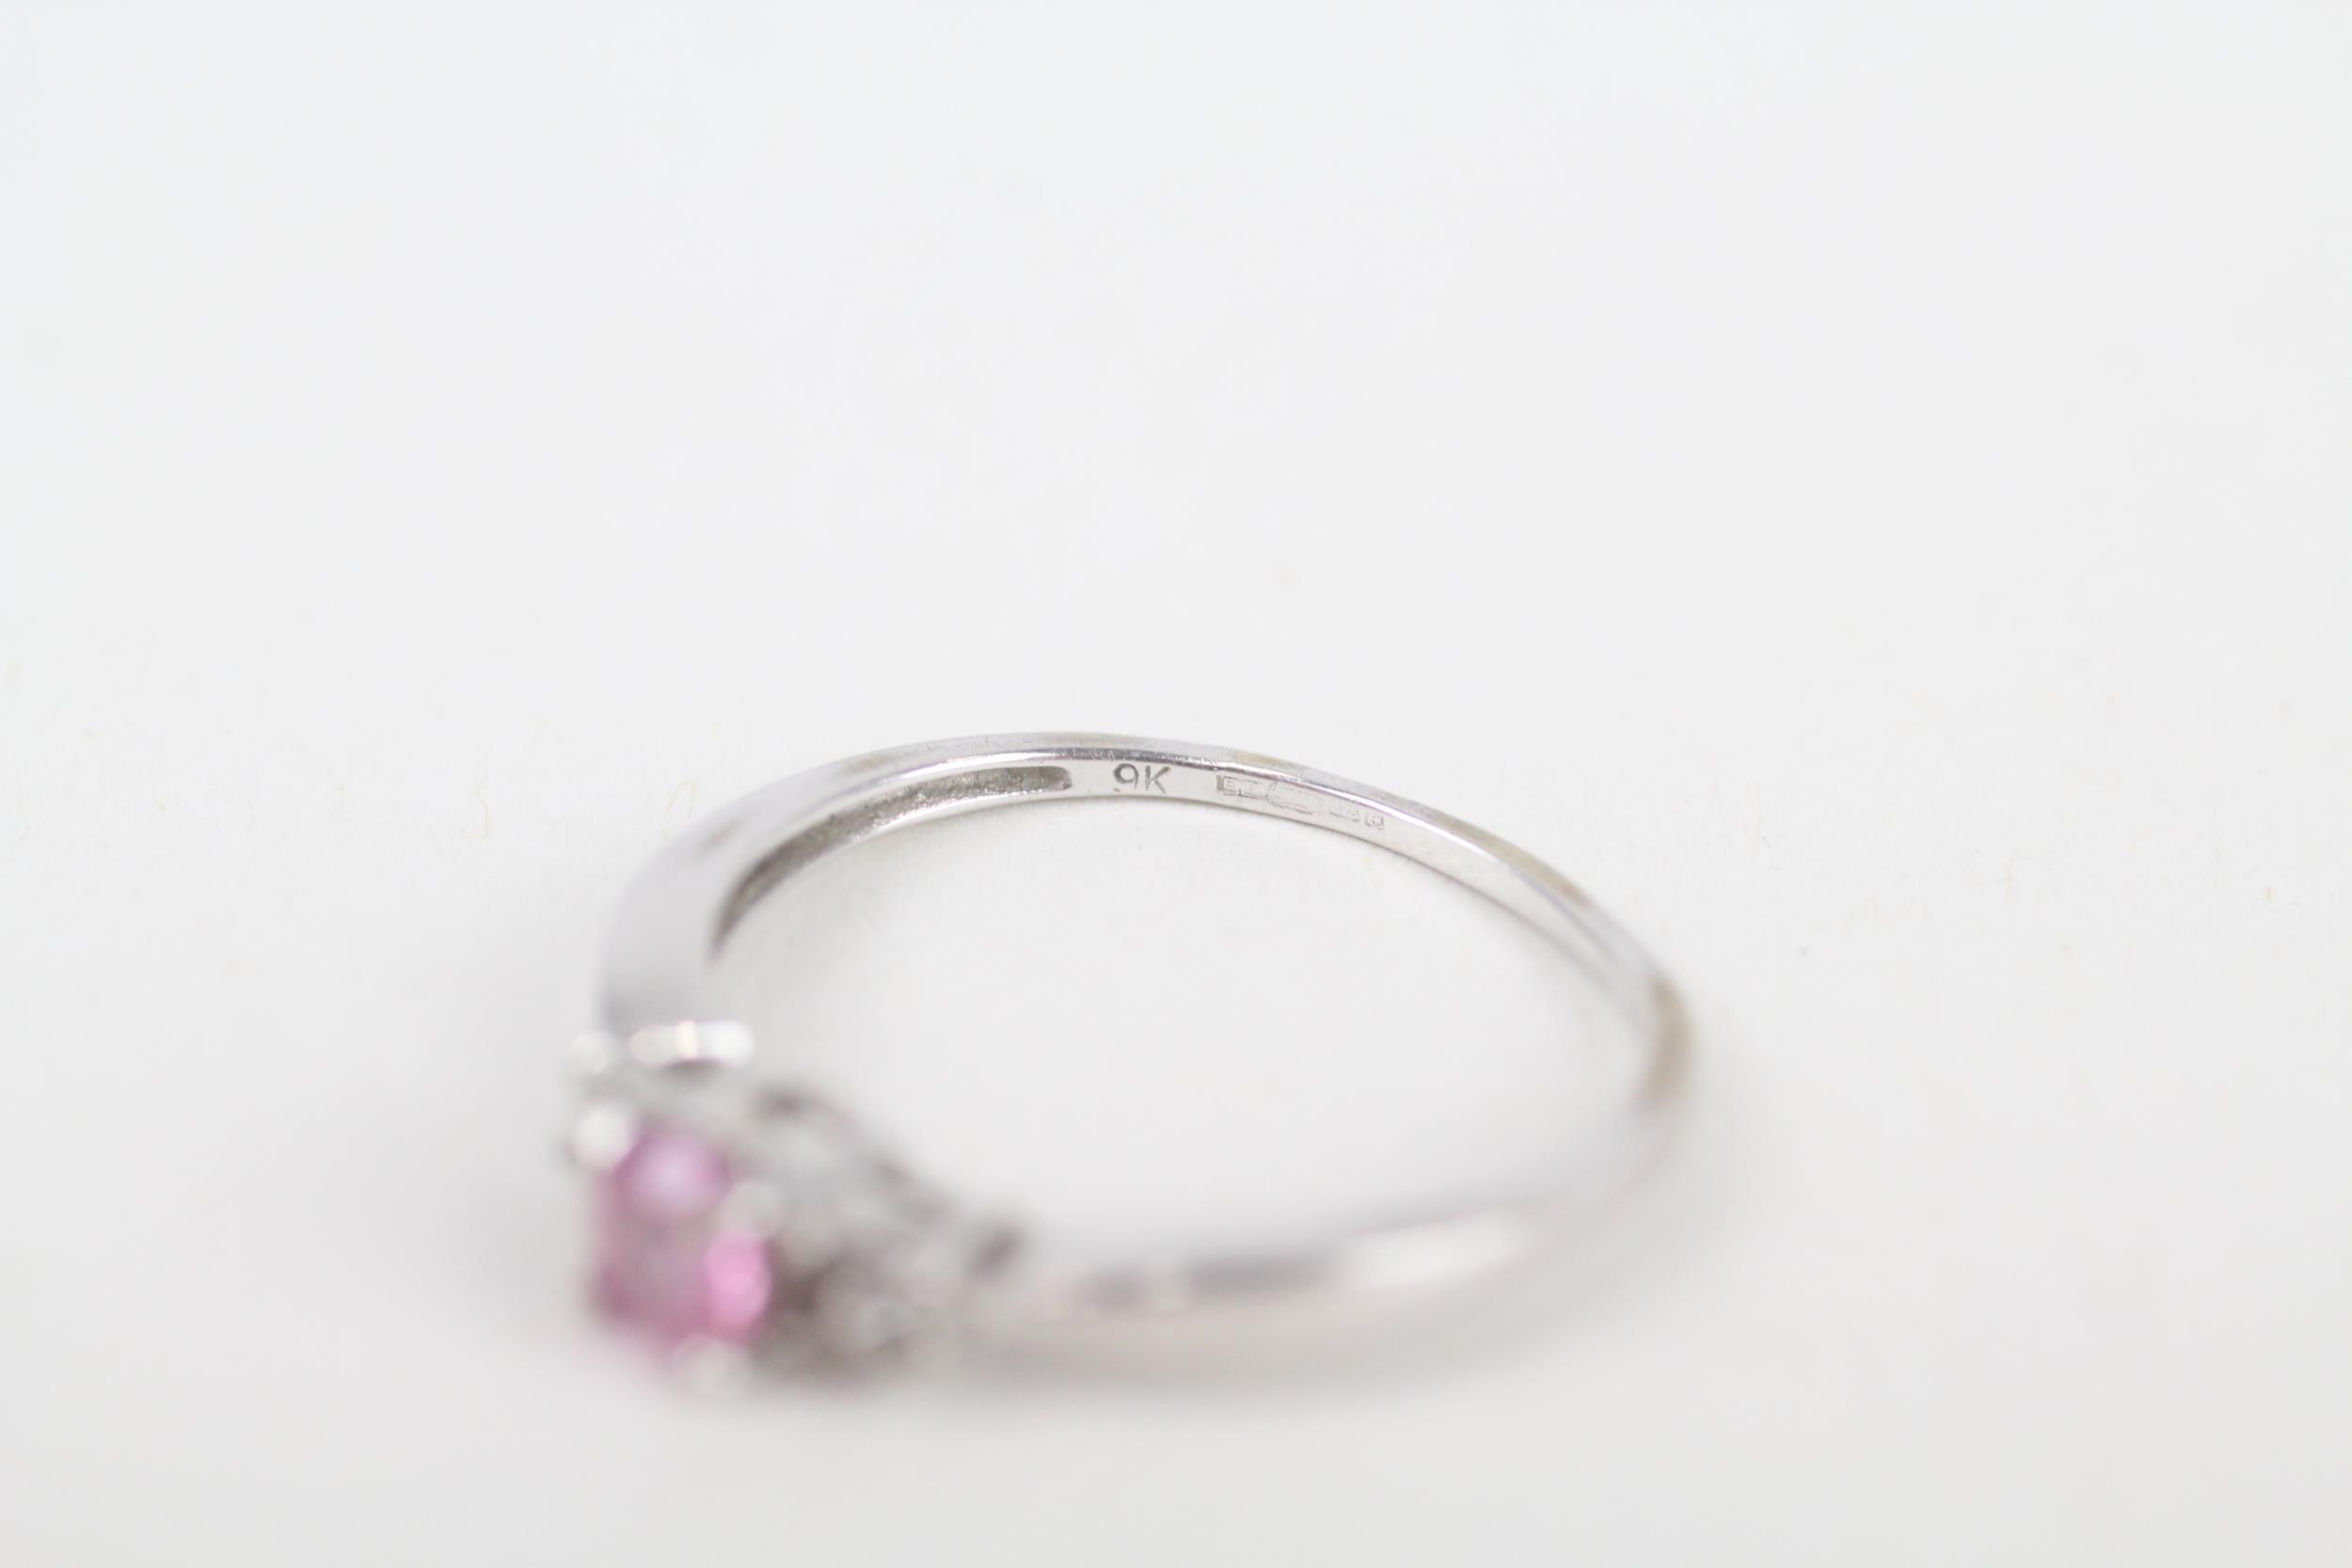 9ct gold pink sapphire & diamond three stone ring Size K 1/2 1.2 g - Image 5 of 5